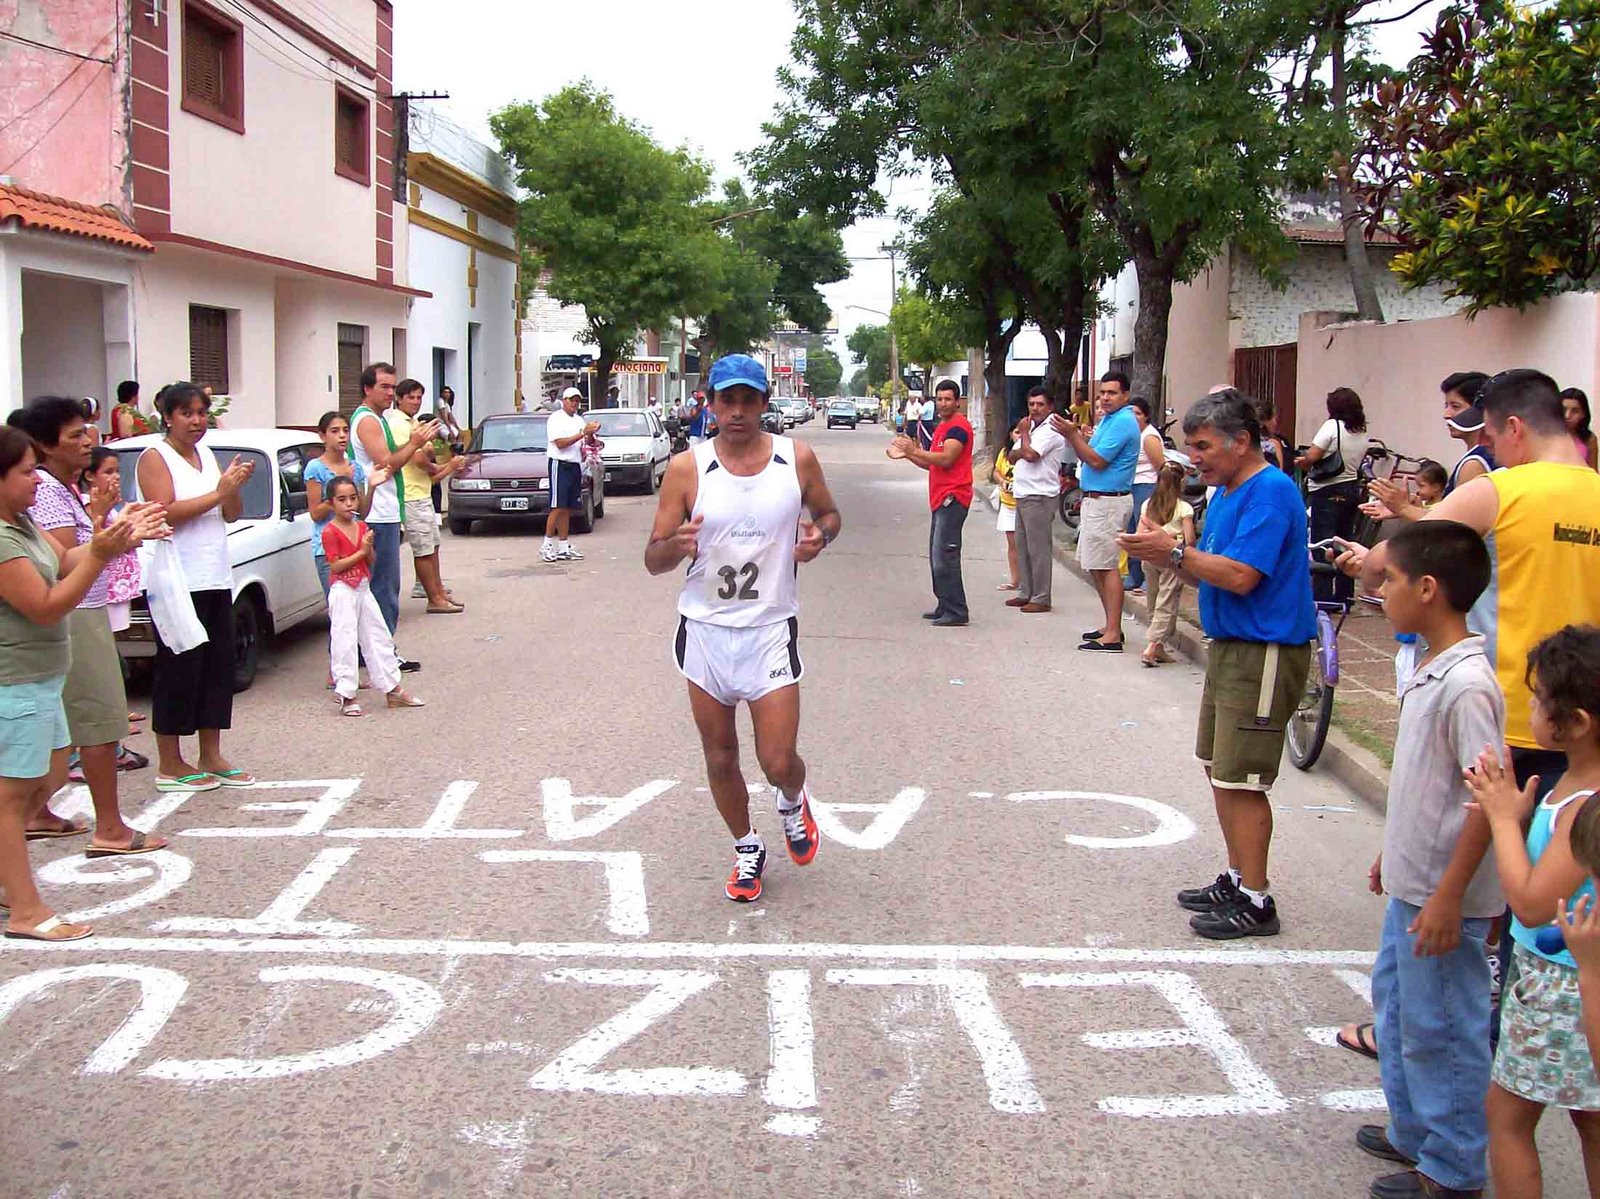 [Maraton+55+aniversario+LT6+Radio+Goya-+Juan+Lobo,+el+veterano+ganador+de+la+competencia+cruza+primero+la+meta+aplaudido+por+todos.jpg]